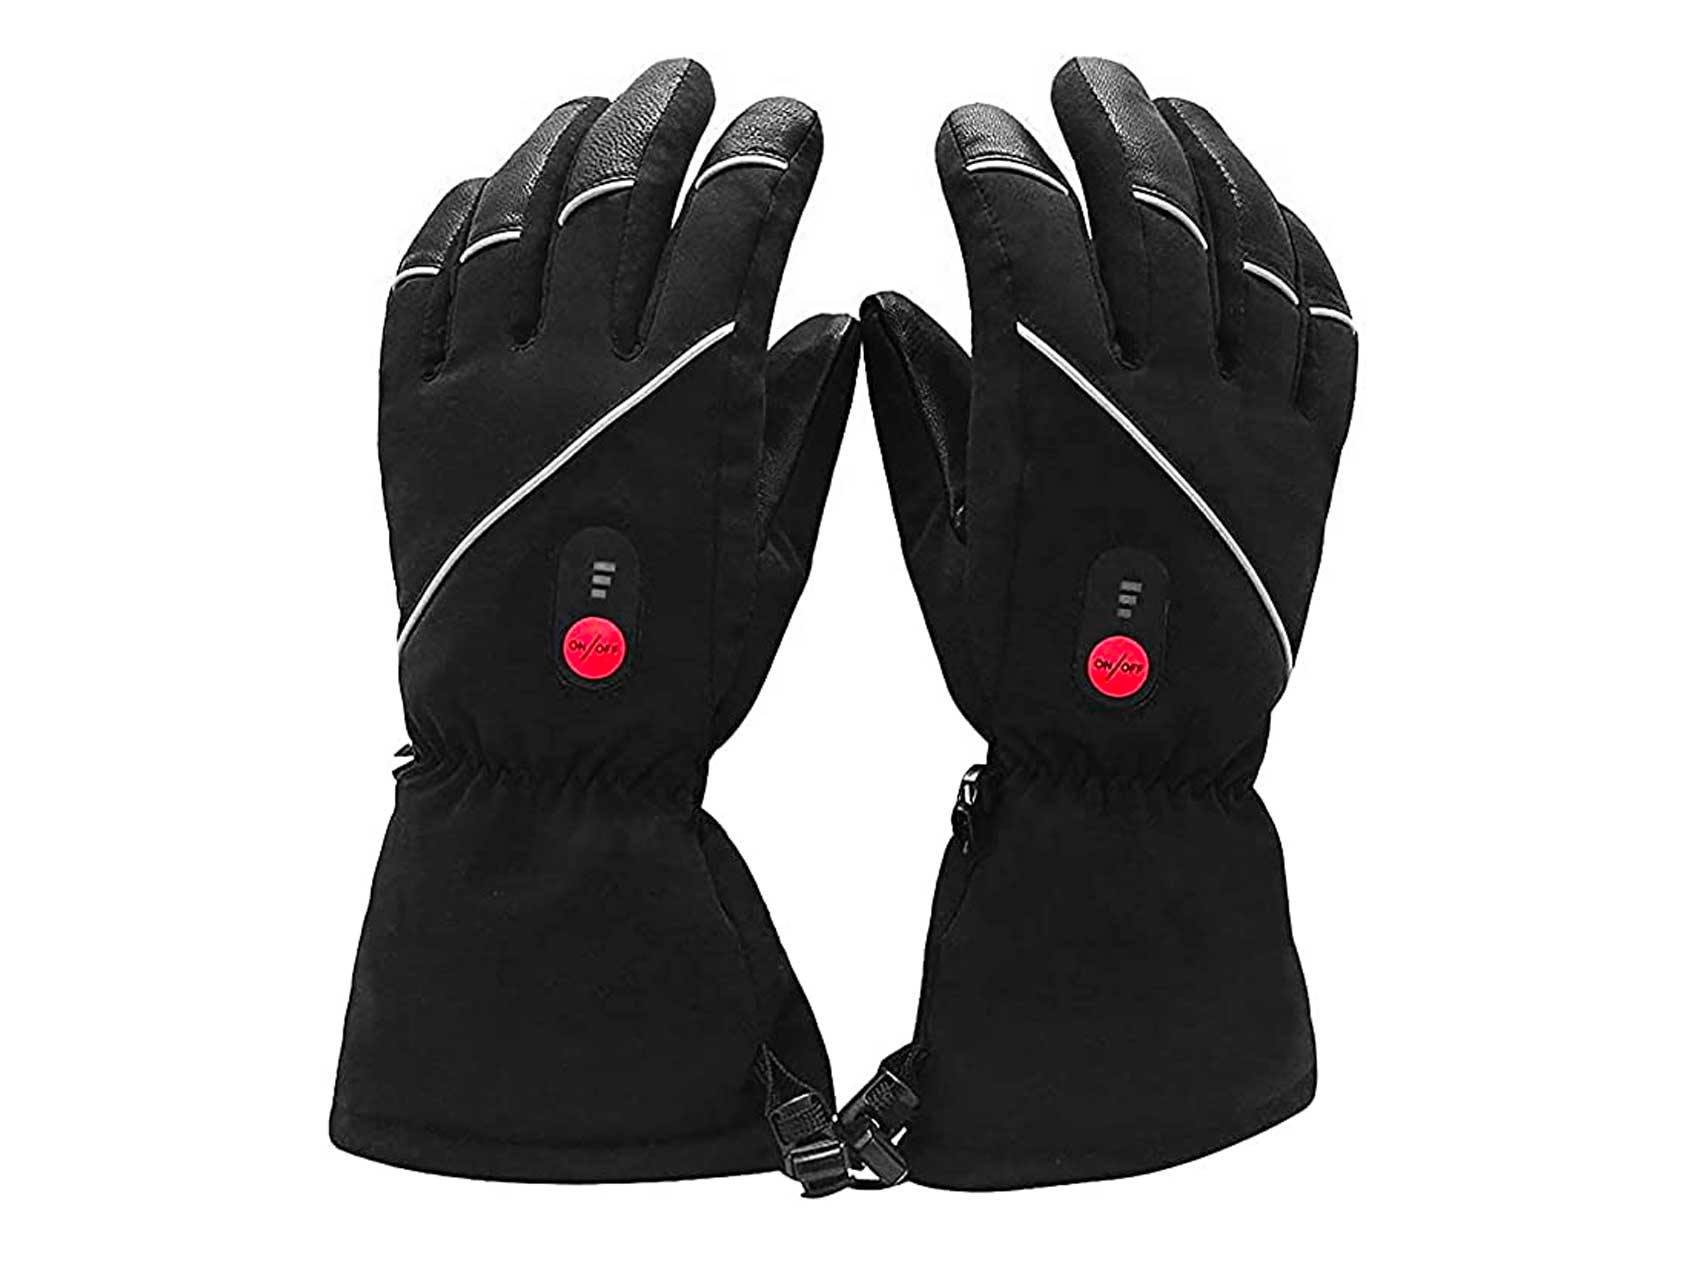 Savior Heated Gloves for Men Women, Rechargeable Electric Heated Gloves,Heated Skiing Gloves and Snowboarding Gloves